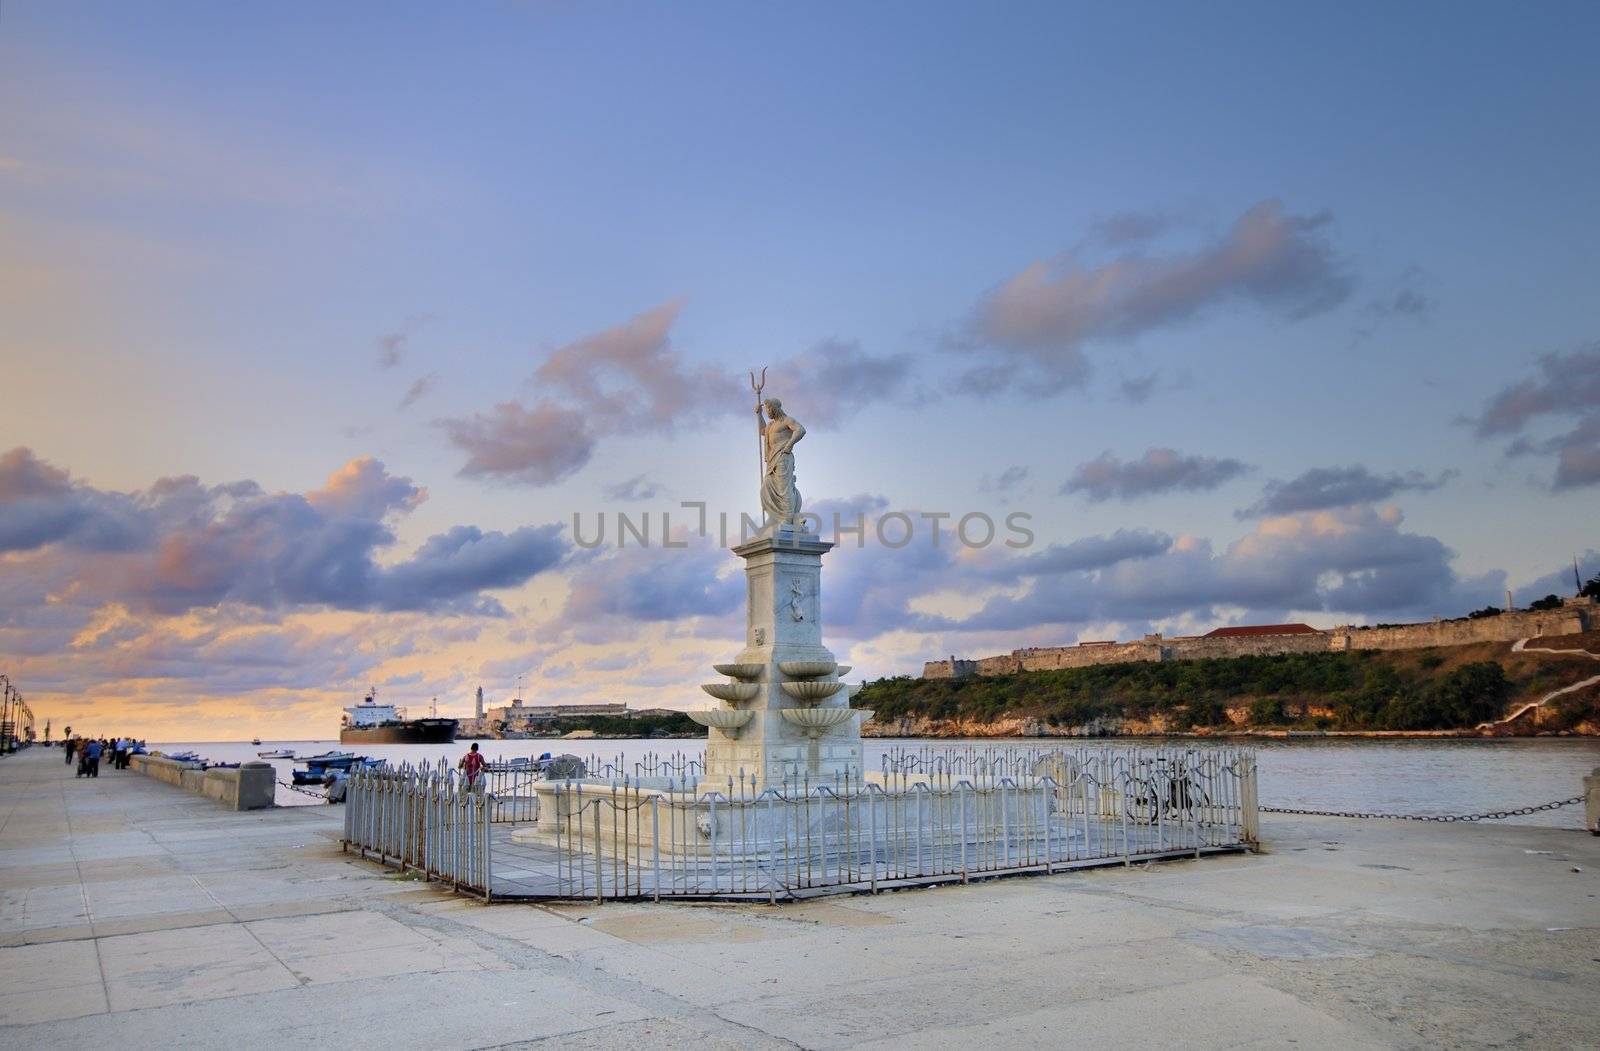 Neptune statue in havana bay entrance by rgbspace